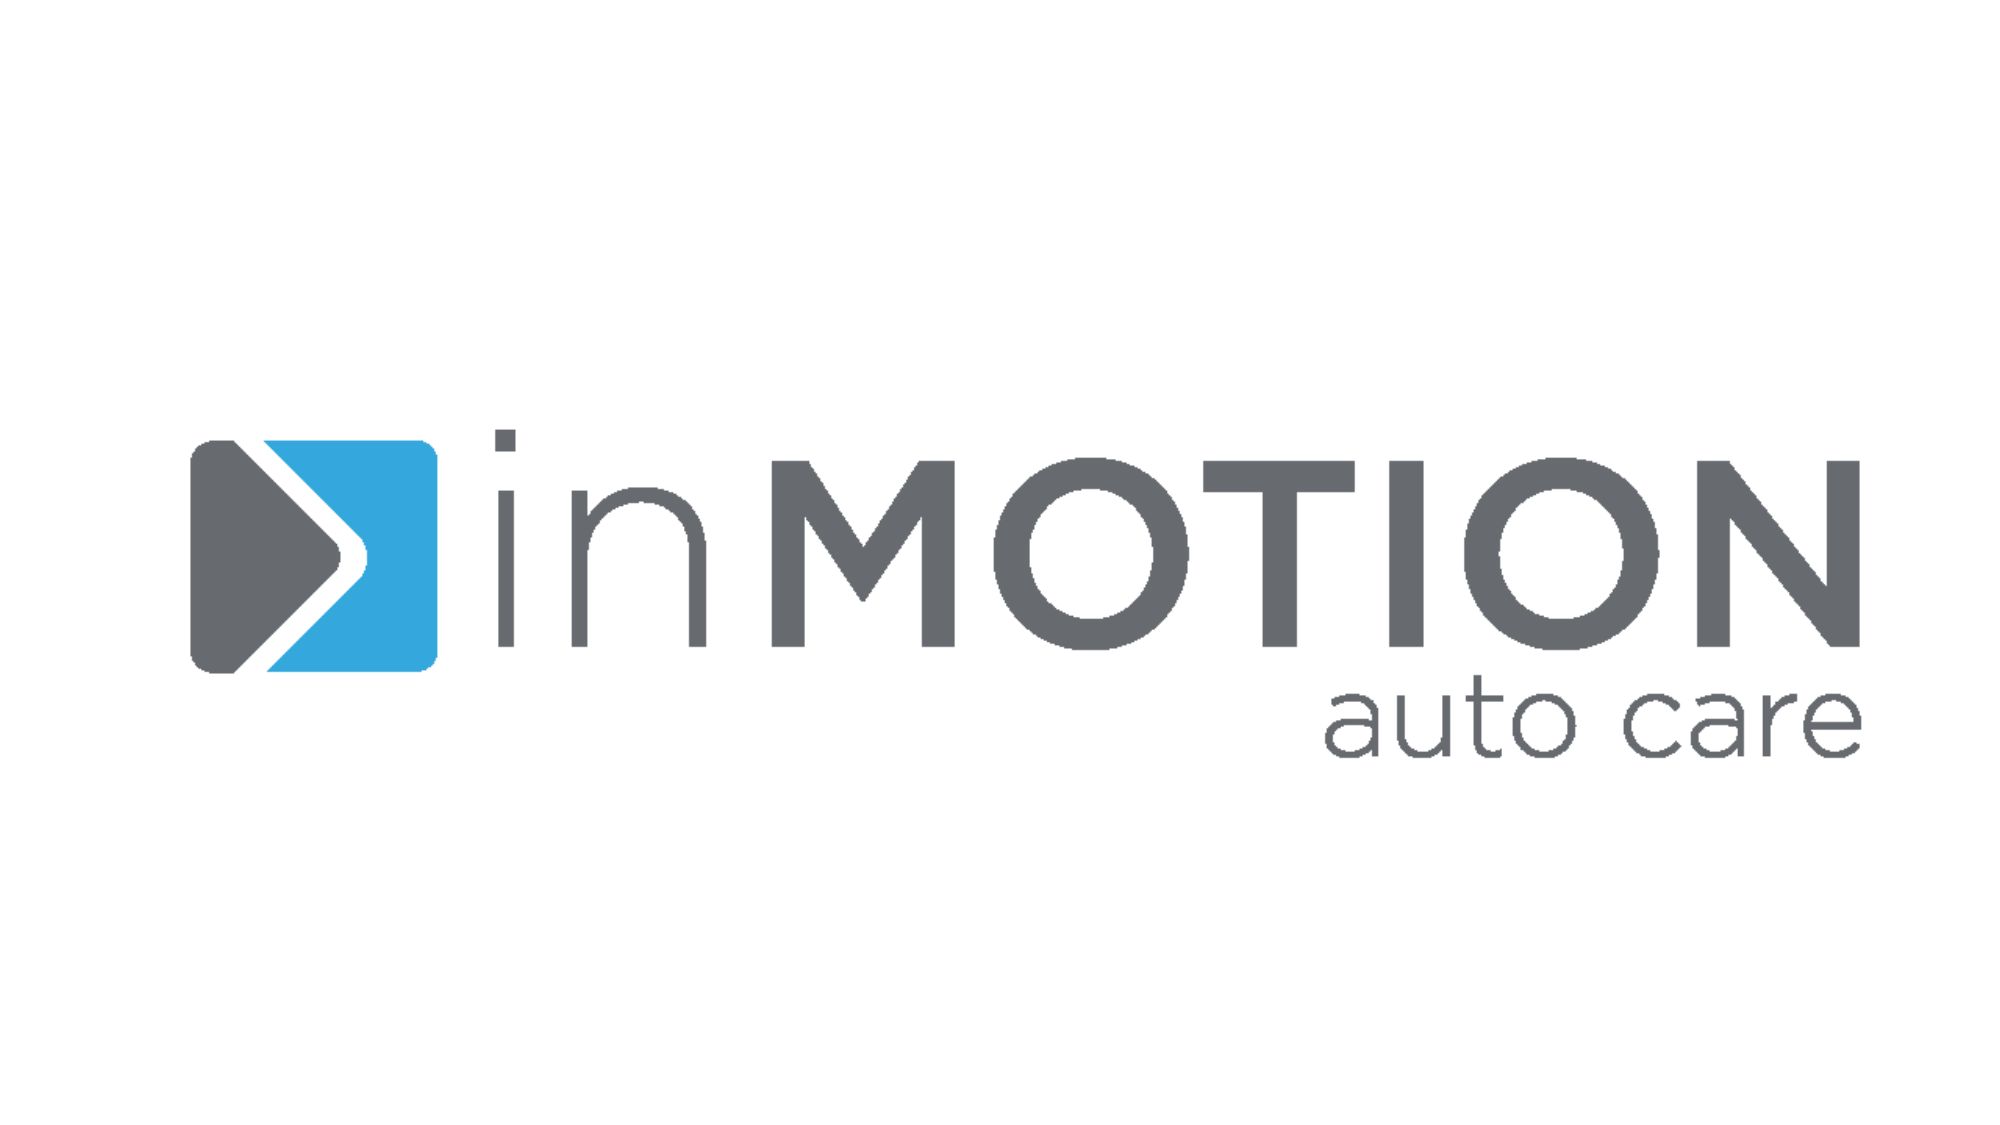 inMOTION Auto Care Logo